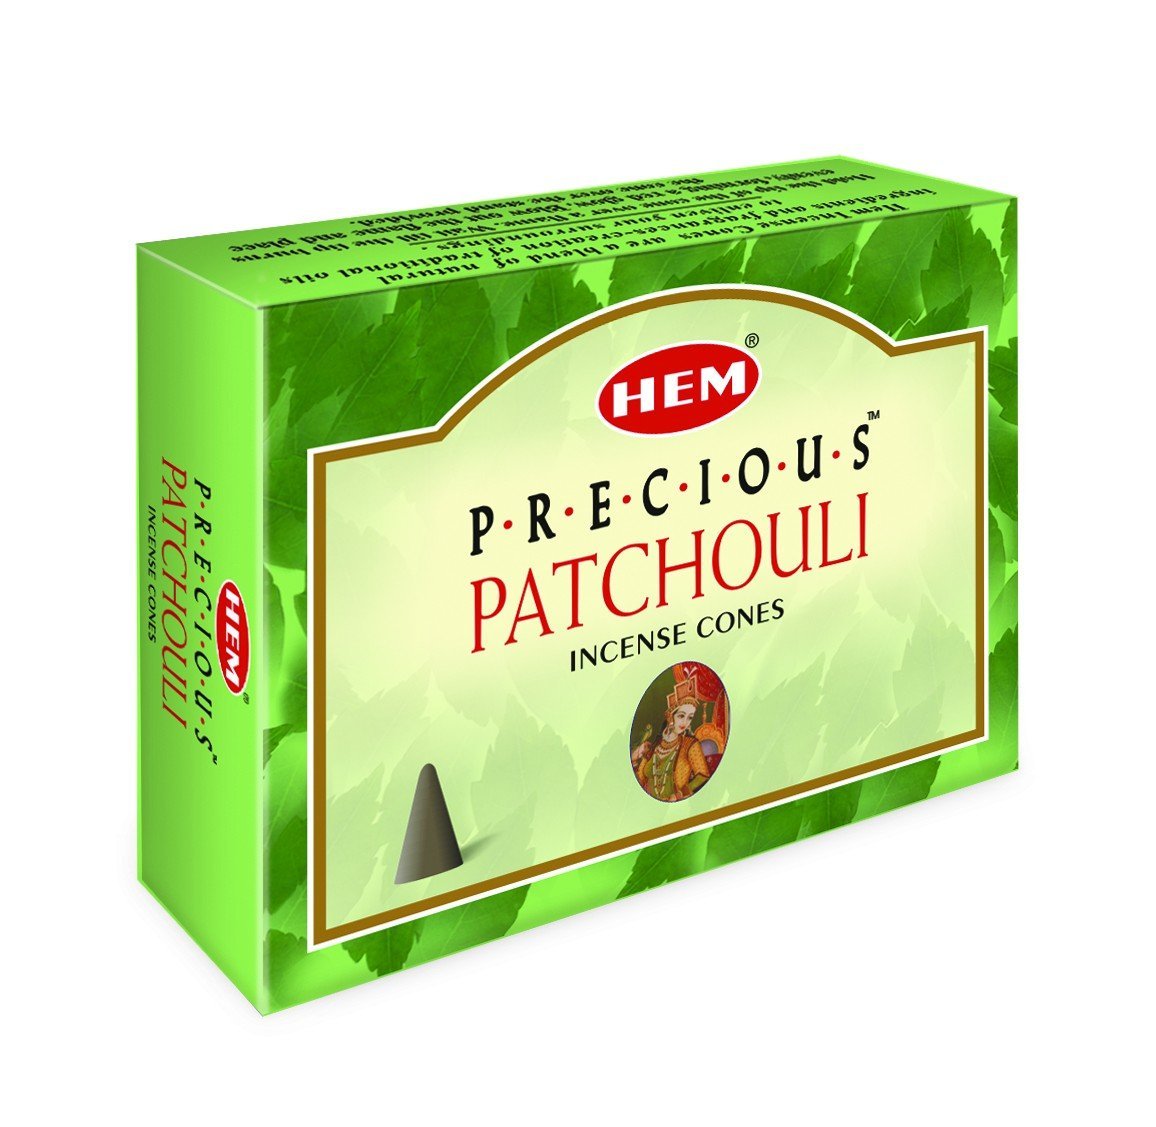 HEM - Precious Patchouli - 120 Incense Cones